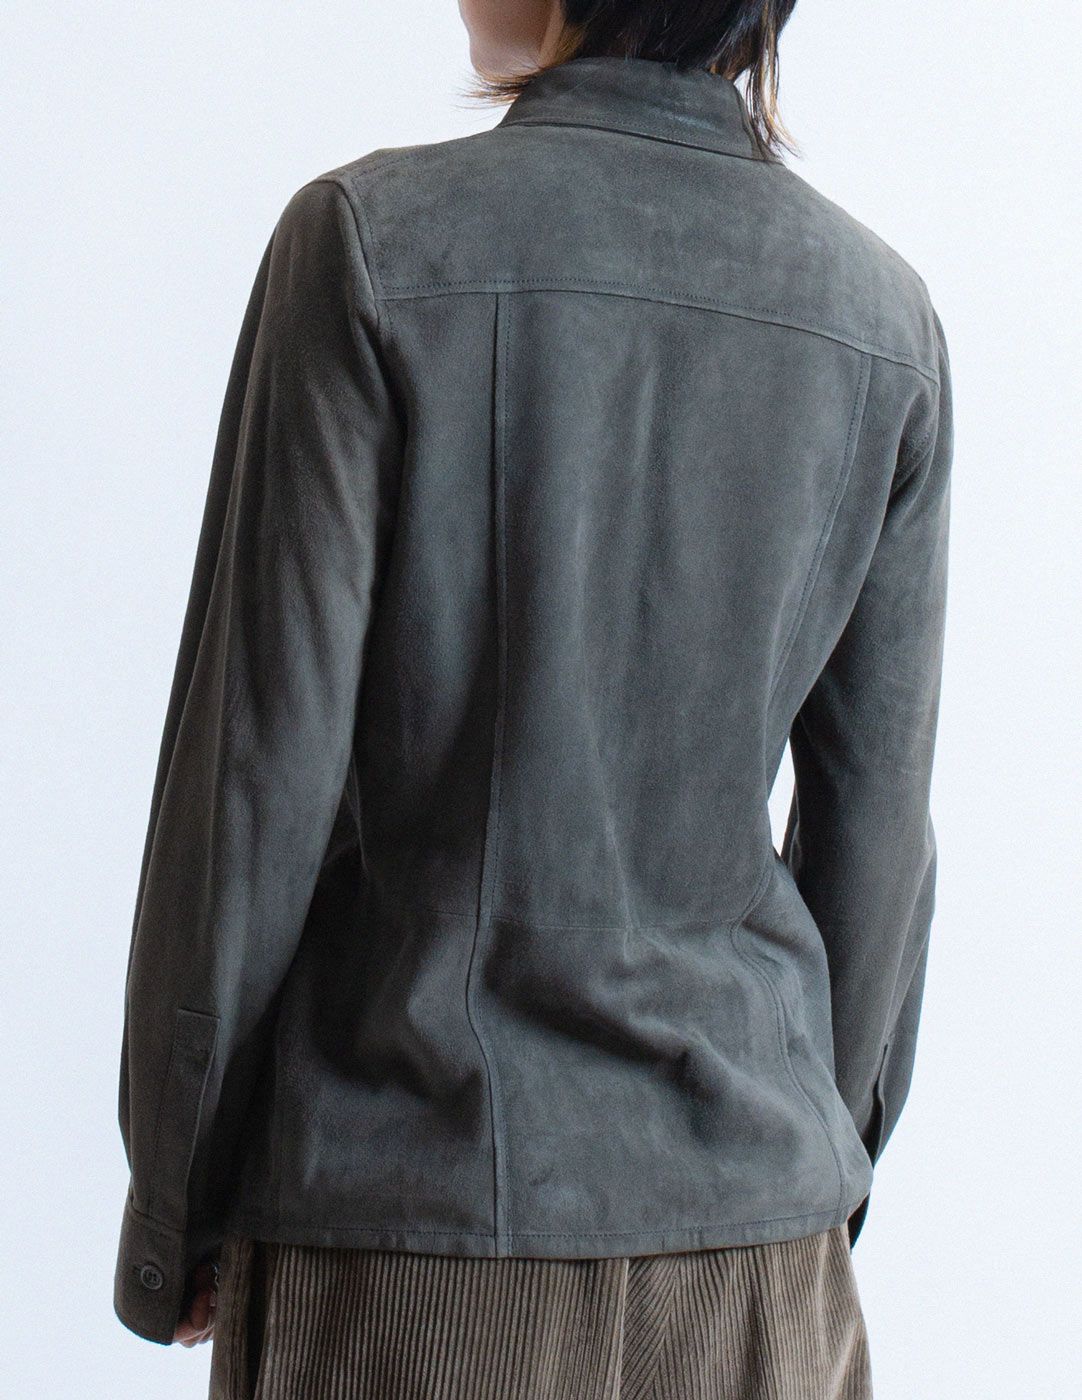 Loewe vintage charcoal suede leather shirt back detail